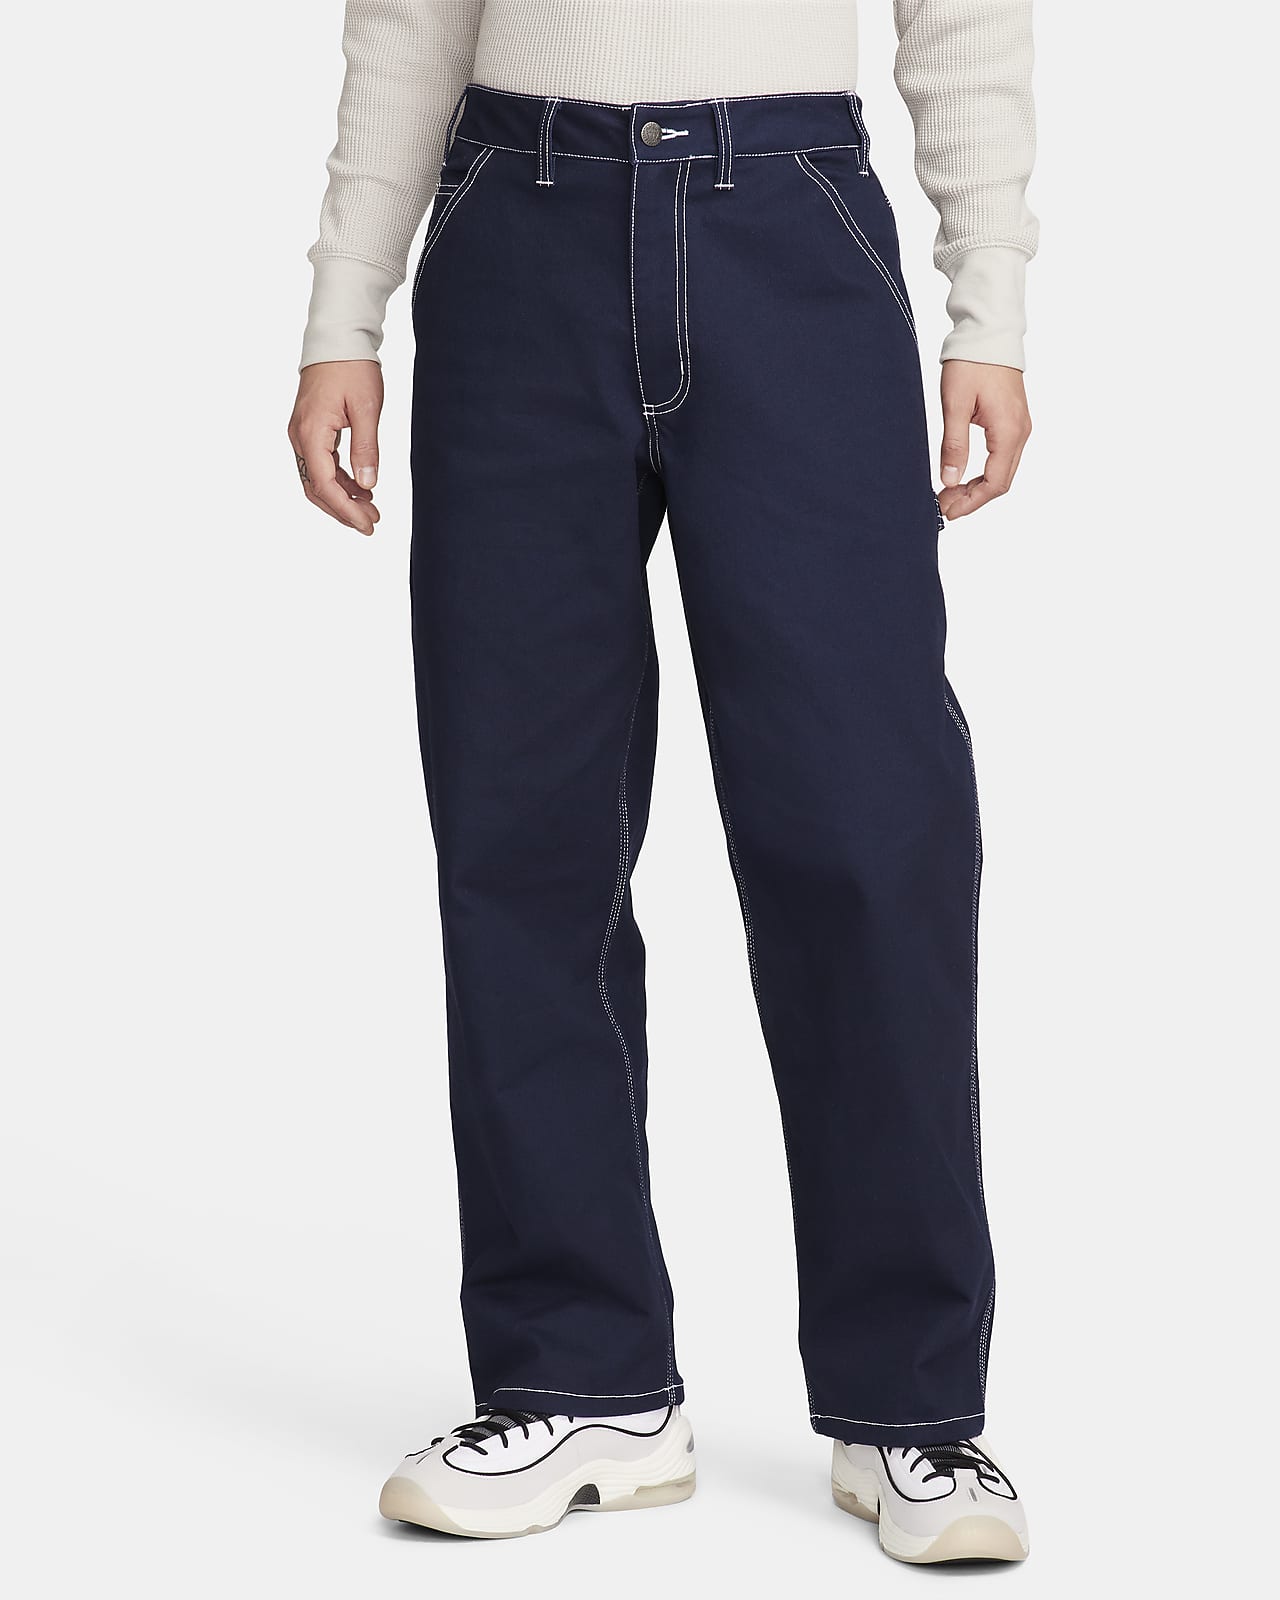 Nike Life Workwear Double Panel Carpenter Pants Size 36 Brown Carhartt  Orig:$199